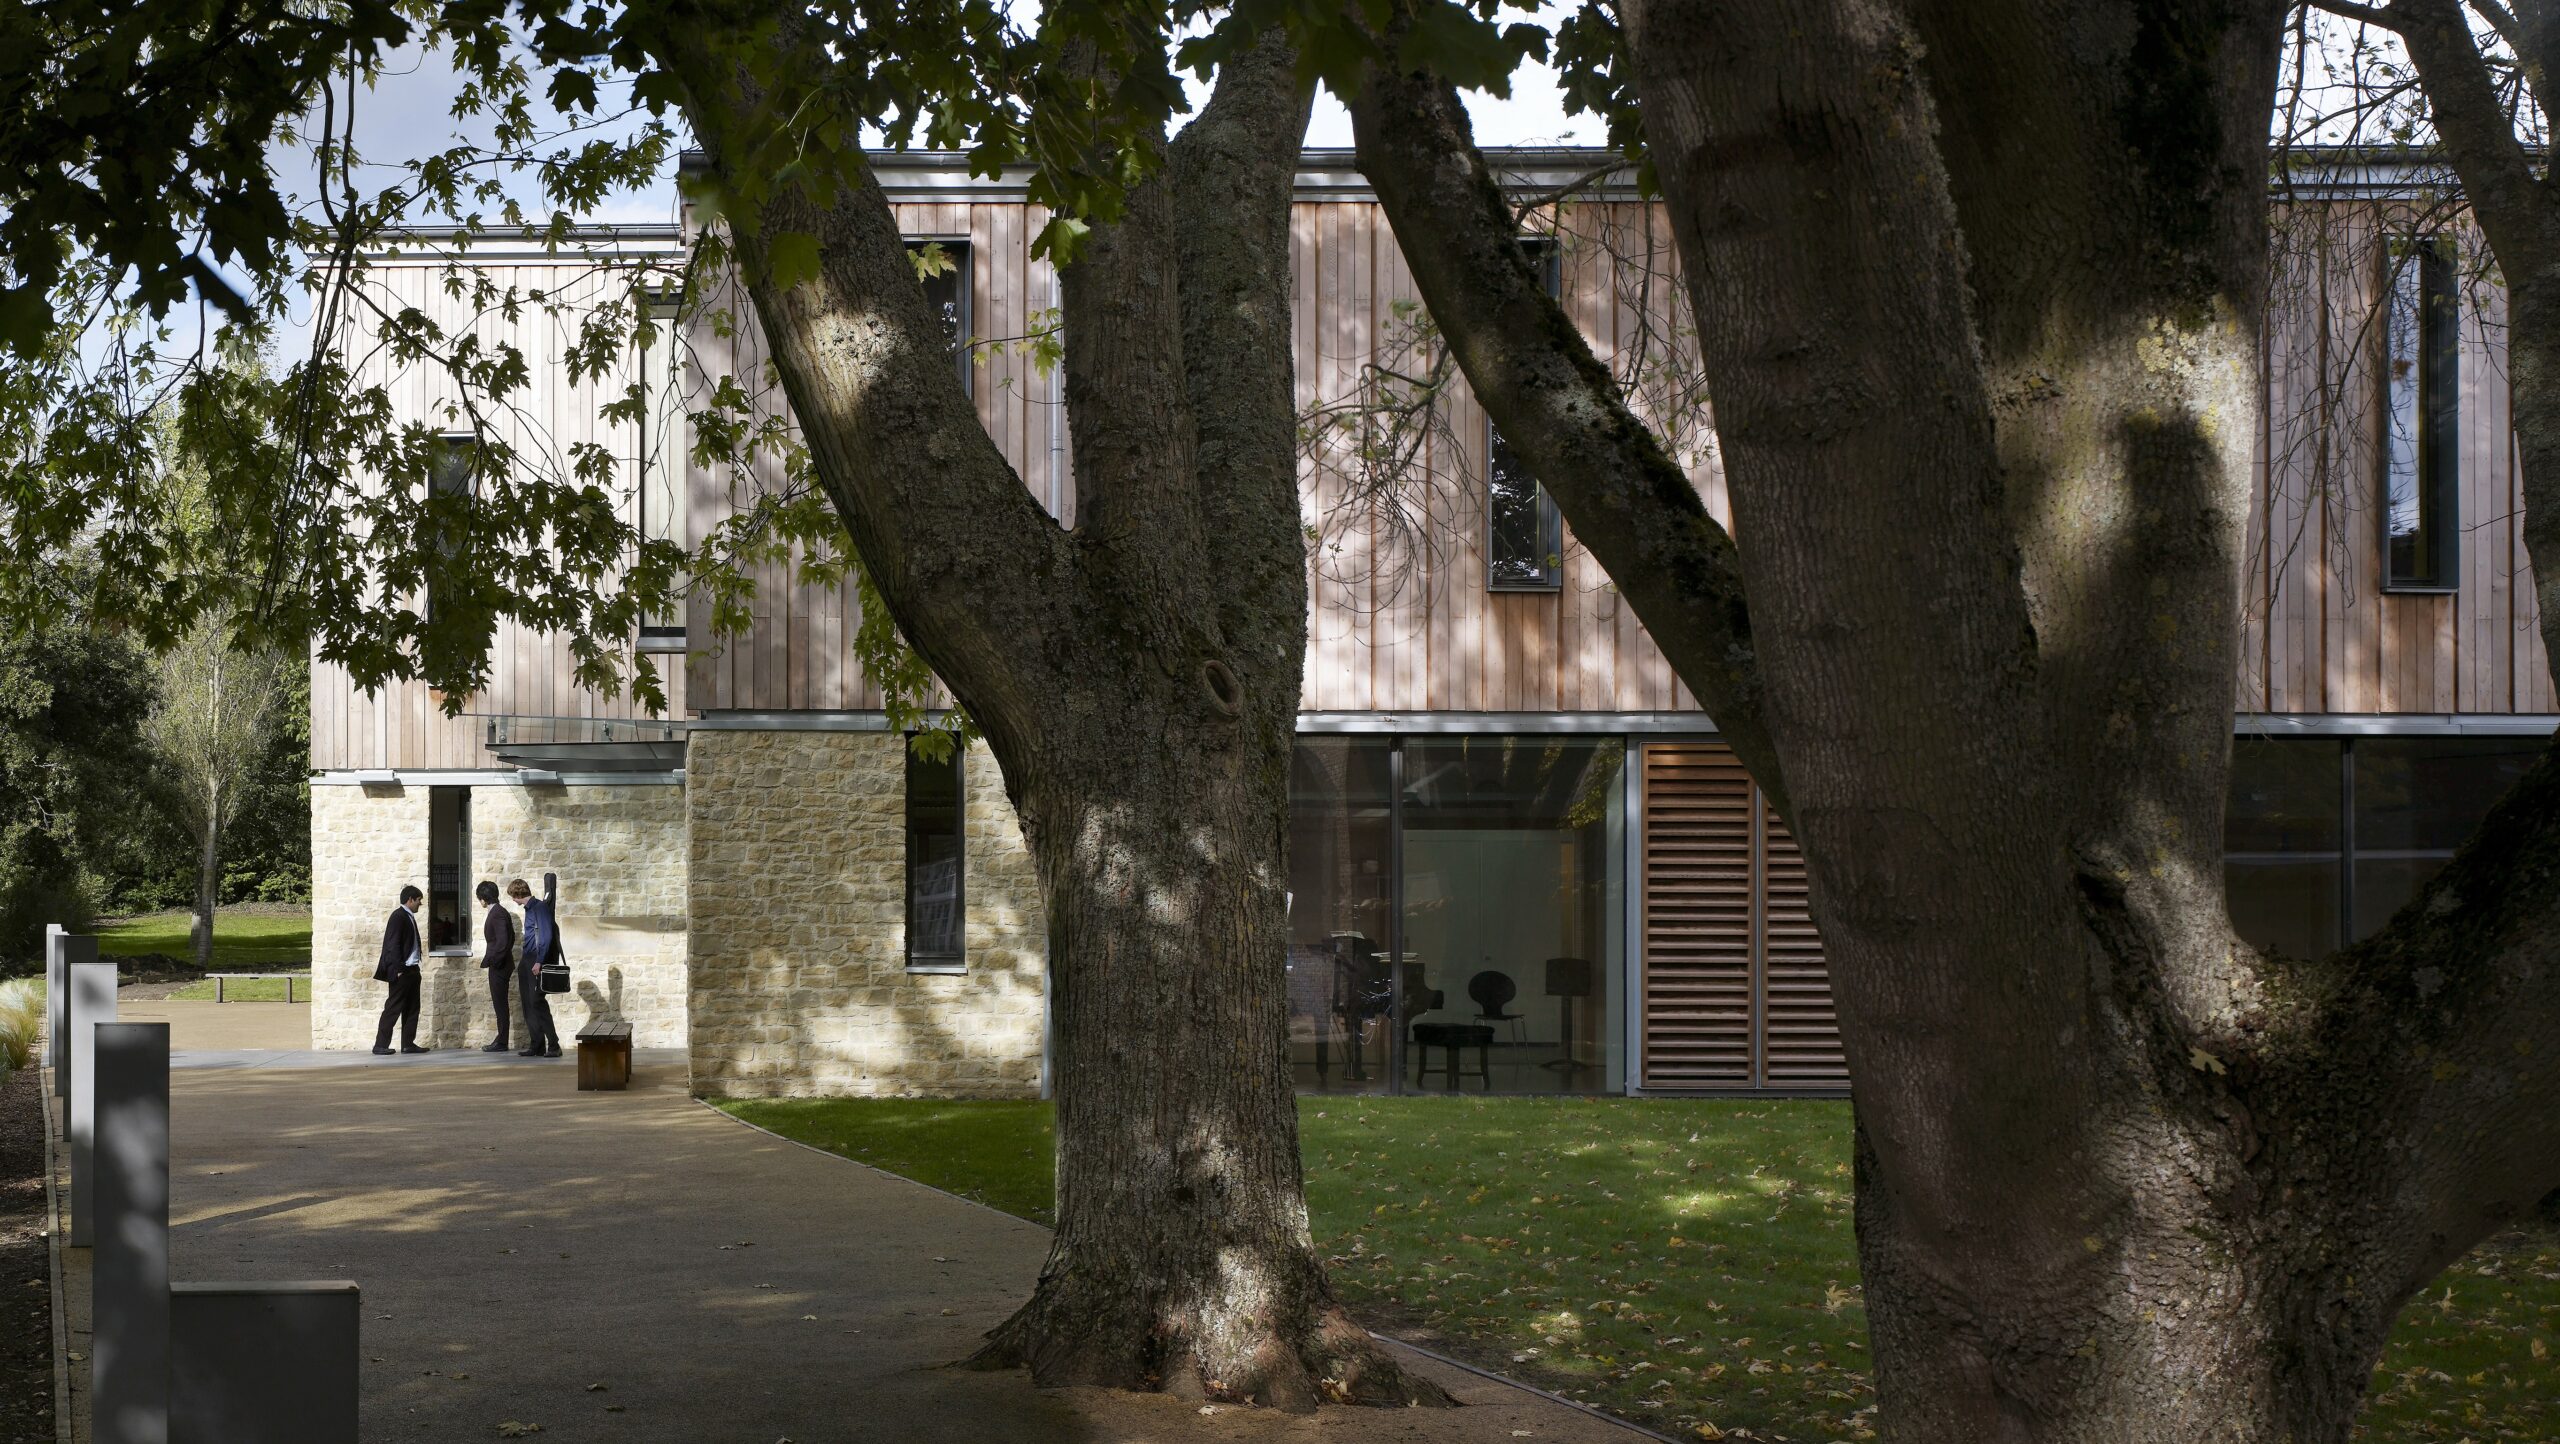 Sherborne School - Music Centre